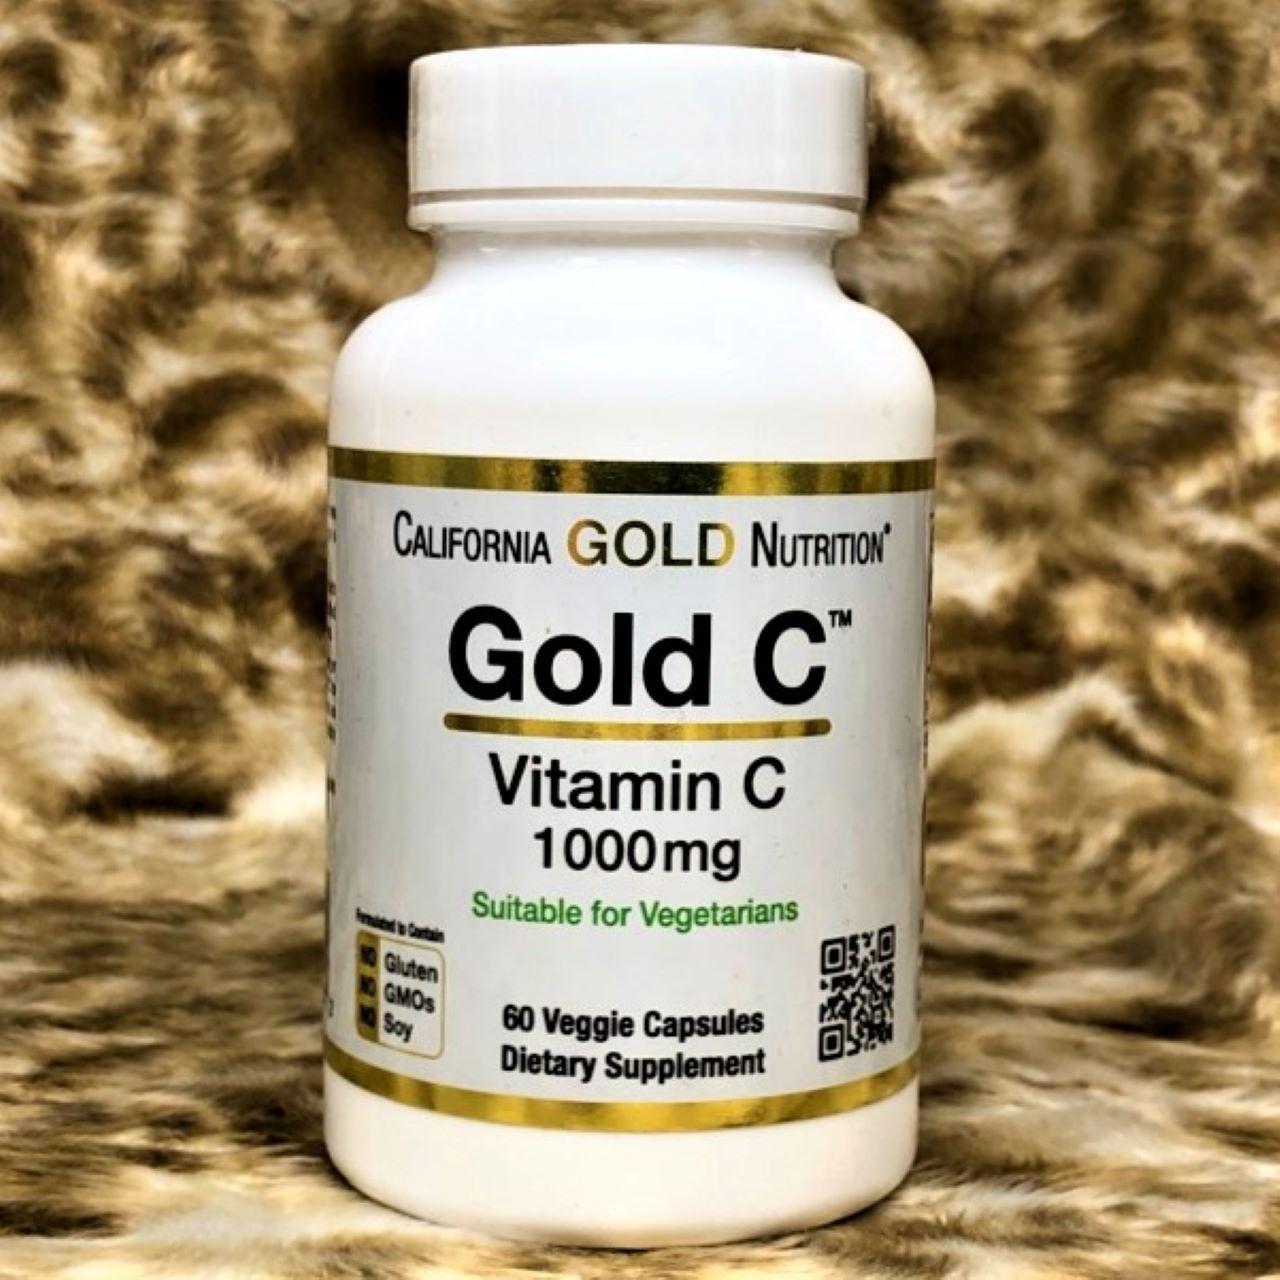 Gold c vitamin c. California Gold Nutrition Vitamin c 1000 MG. Gold c Vitamin c 1000 MG. Витамины Калифорния Gold Nutrition. California Gold Nutrition Gold c 1000 мг.